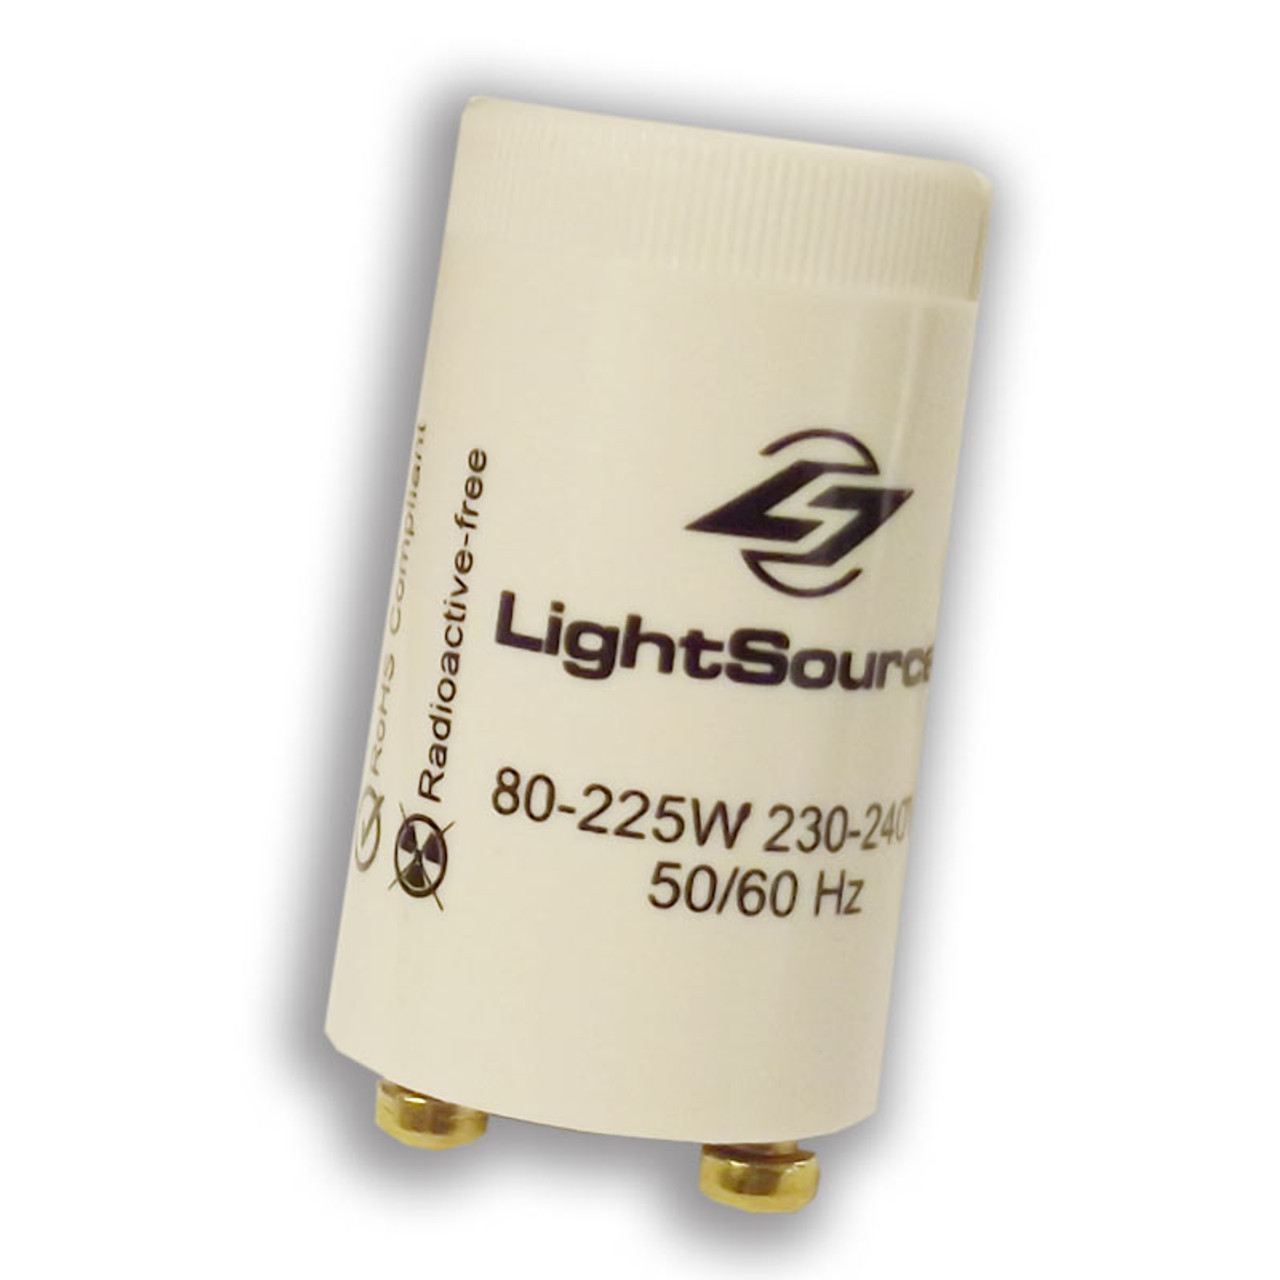 Lightsource 80W-225W Taniing Lamp Starter